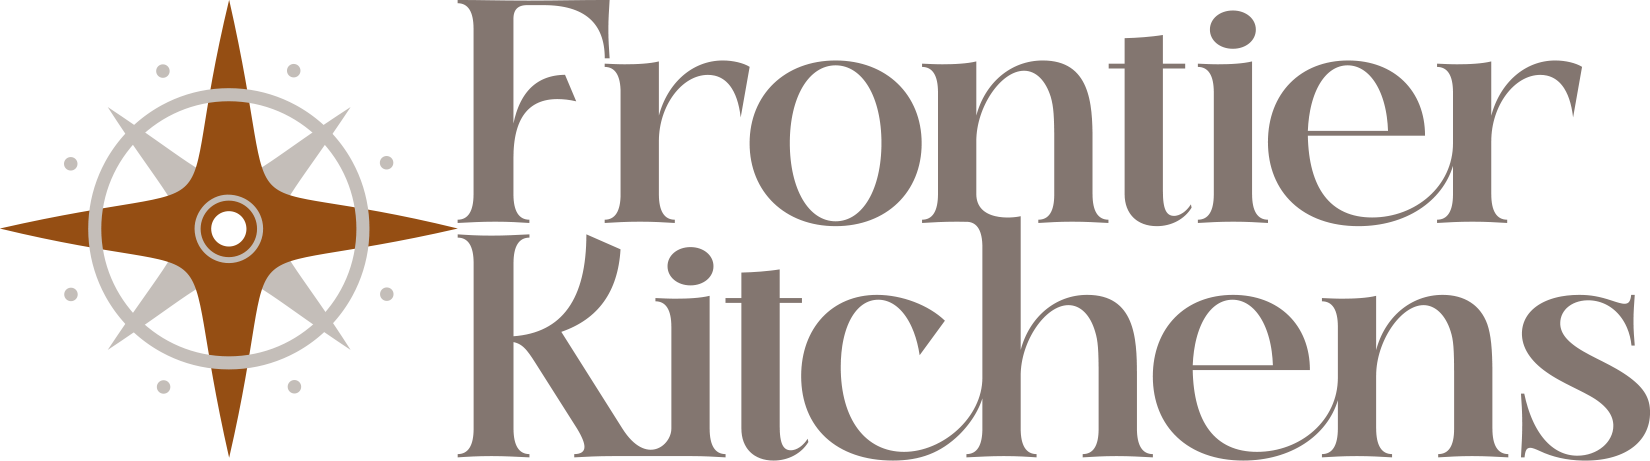 Frontier Kitchens